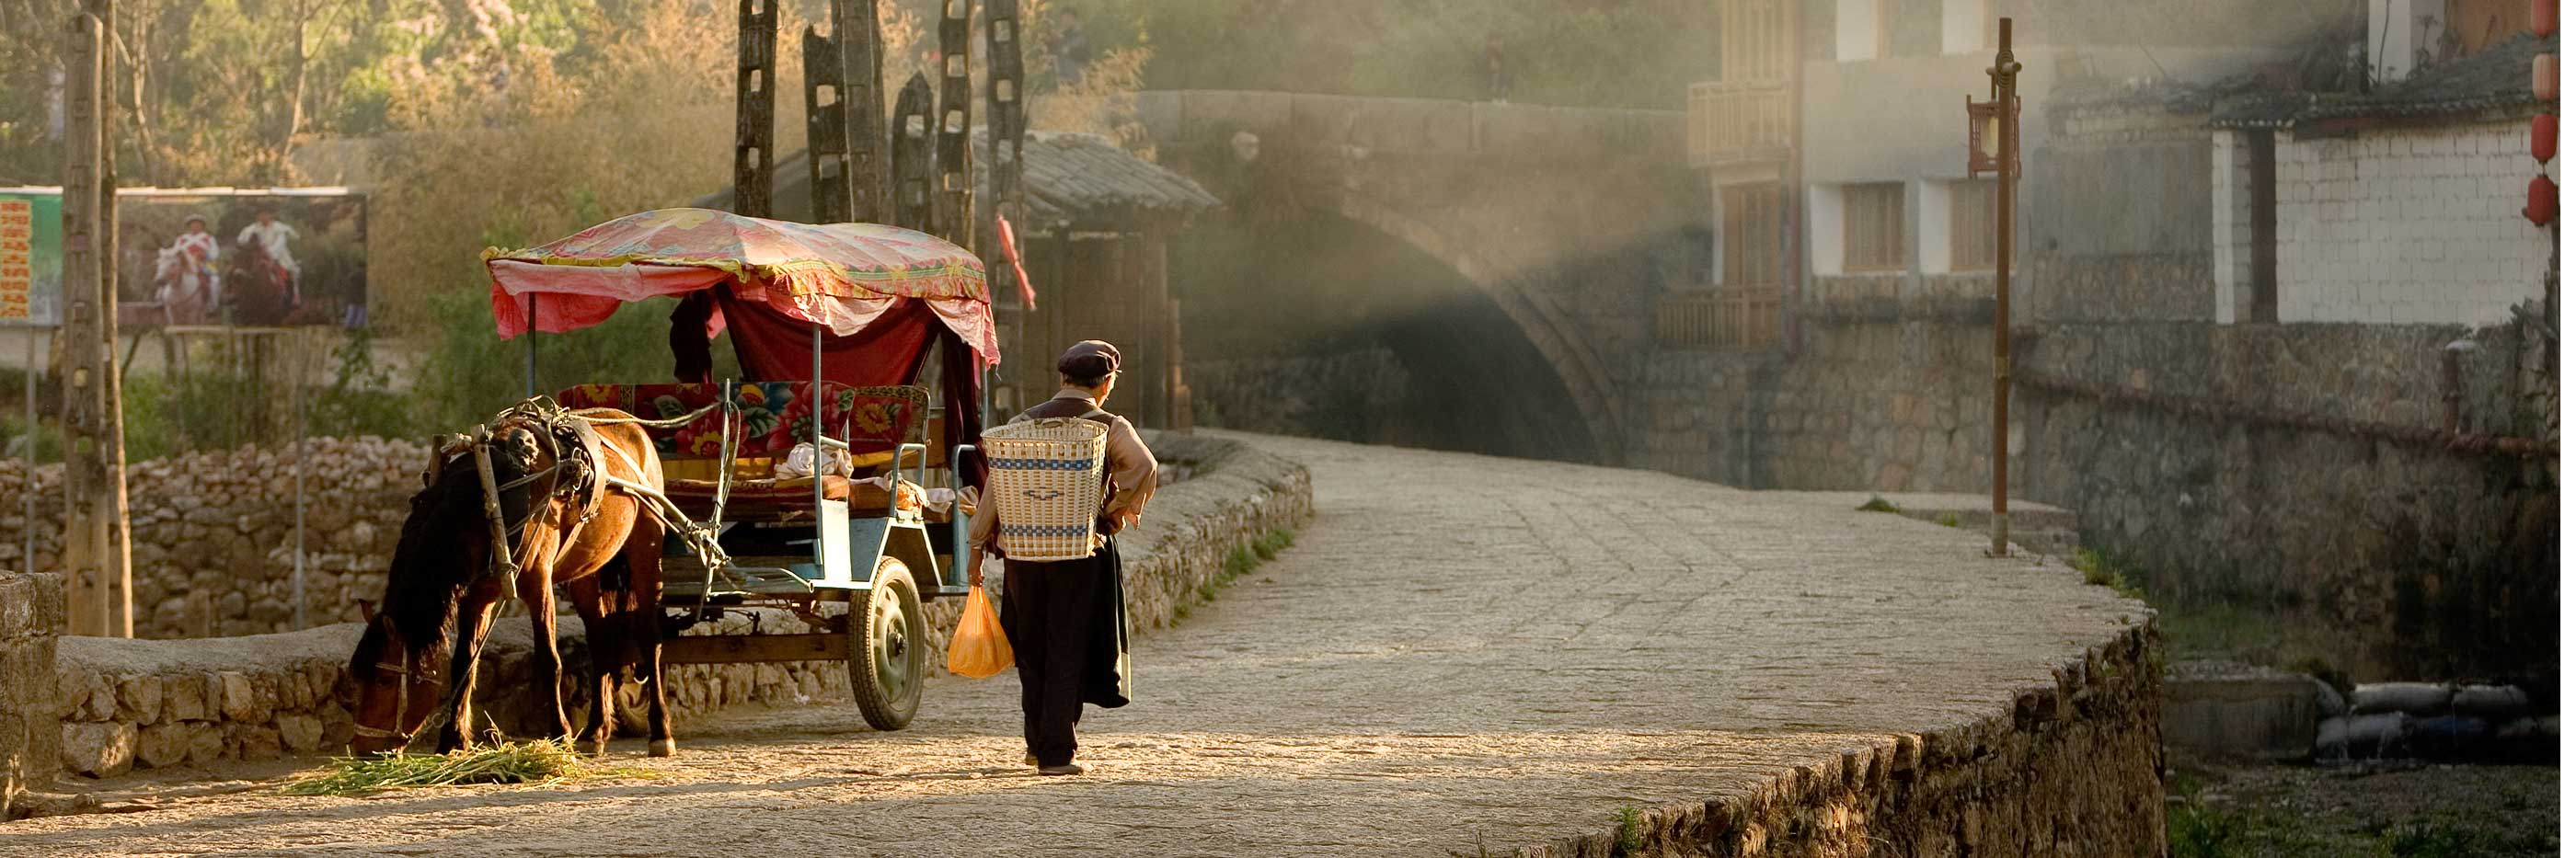 Chinese rural village